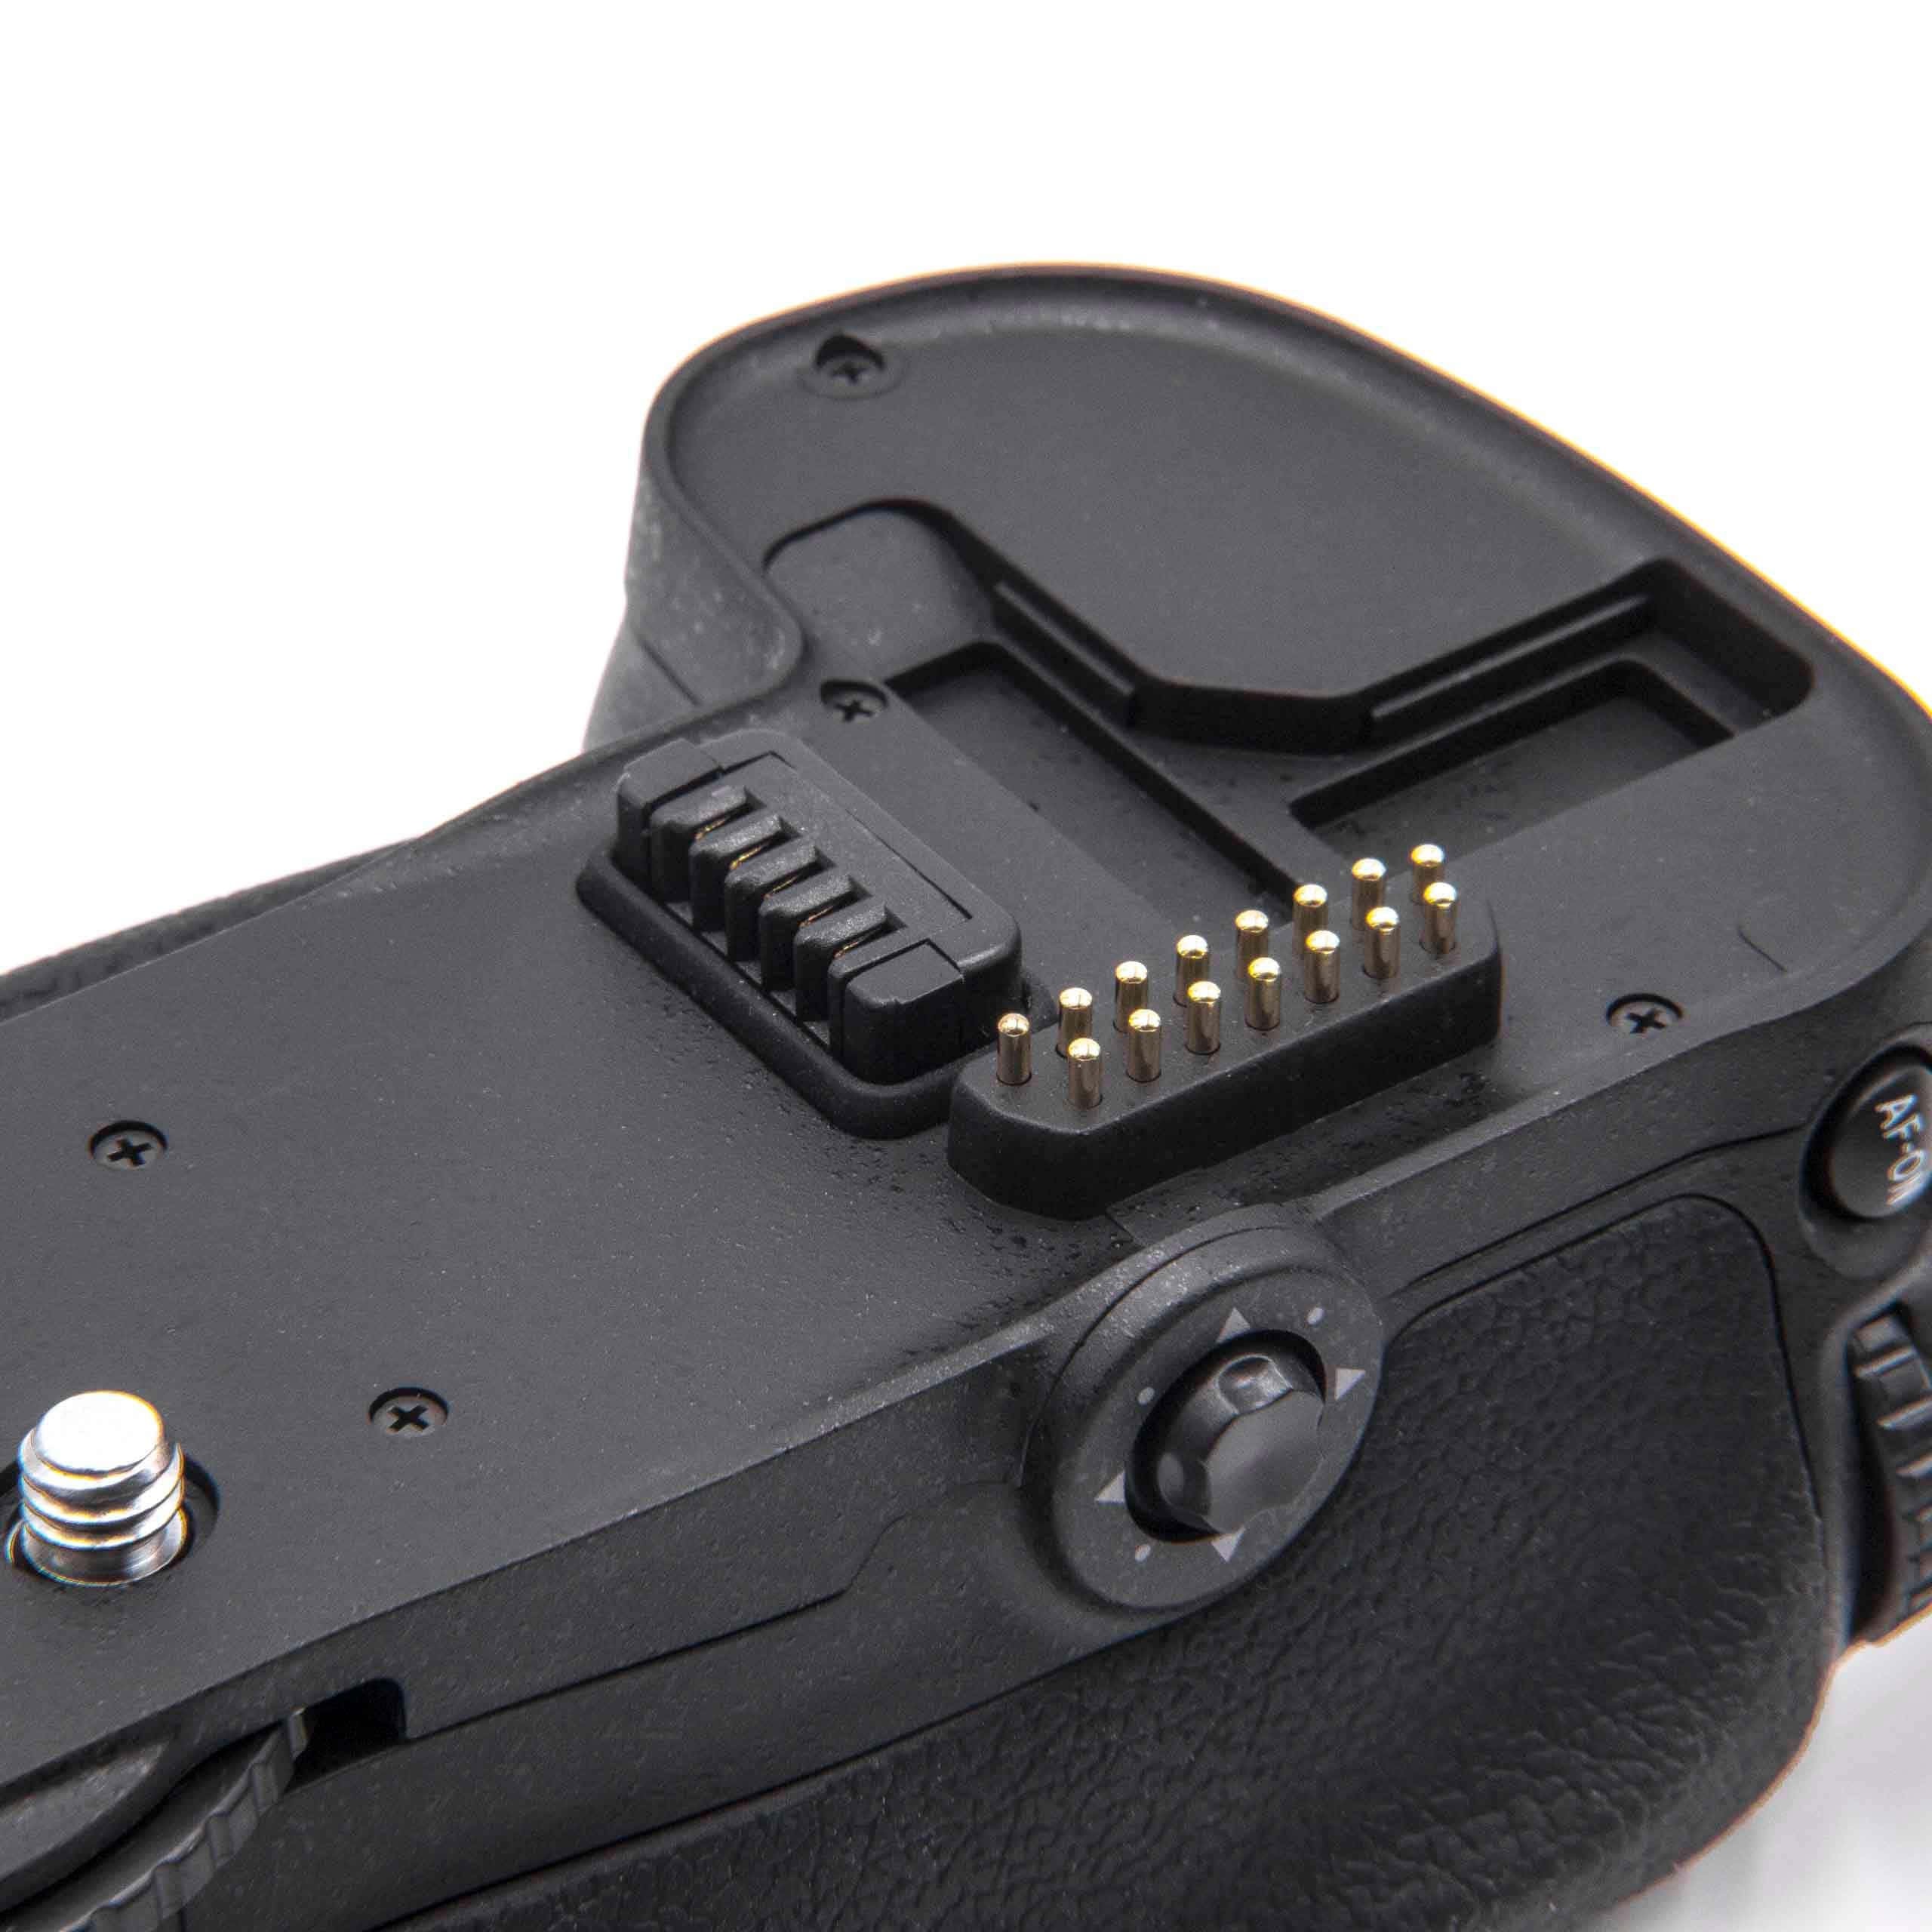 Battery Grip replaces Nikon MB-D10 for Nikon Camera - Incl. Mode Dial